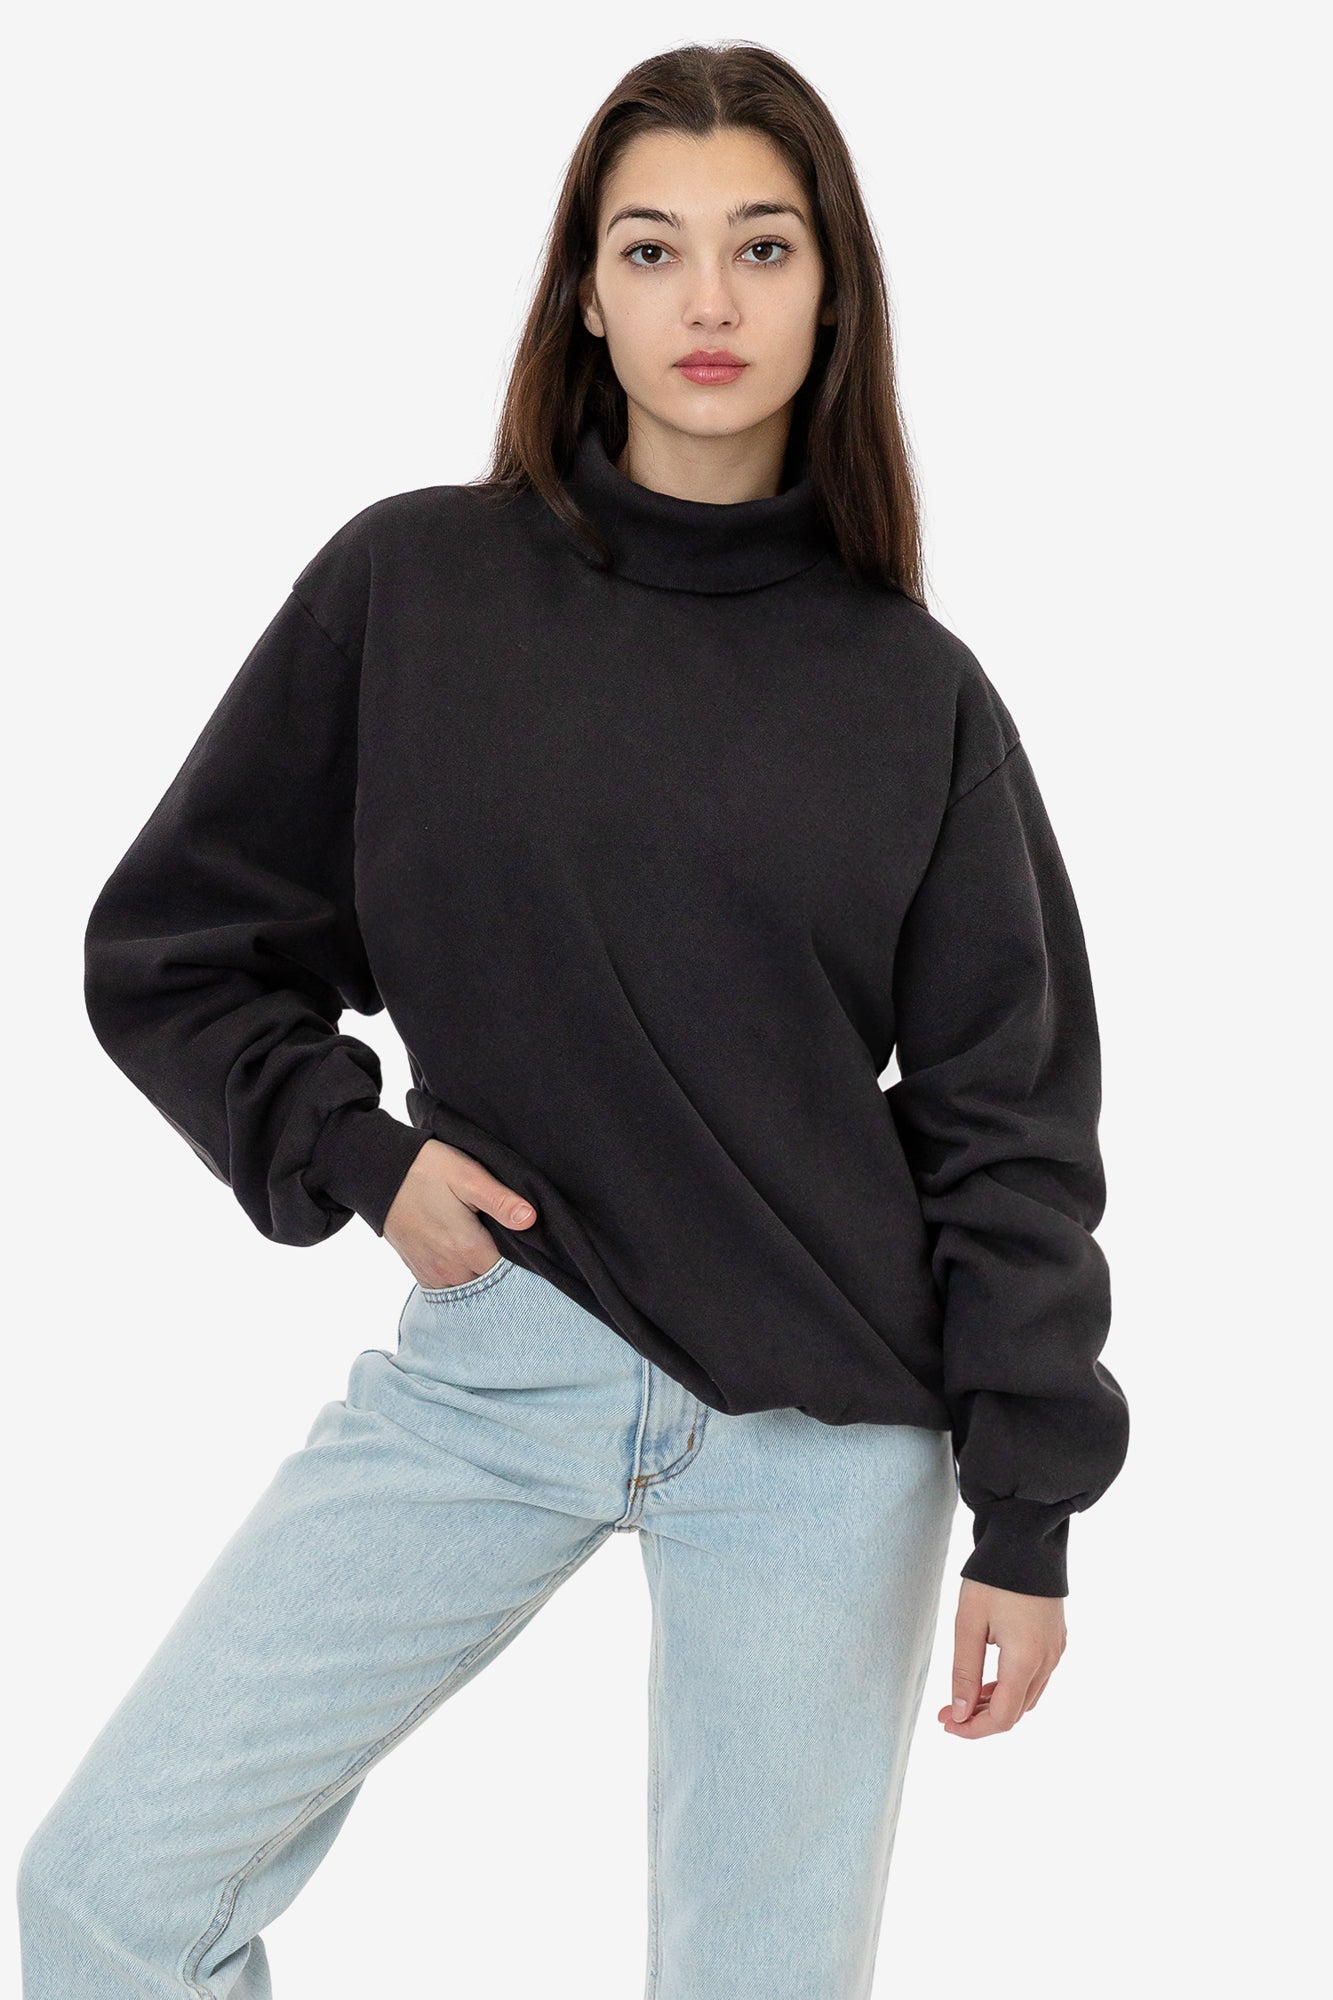 Women's Sweatshirts - Turtlenecks